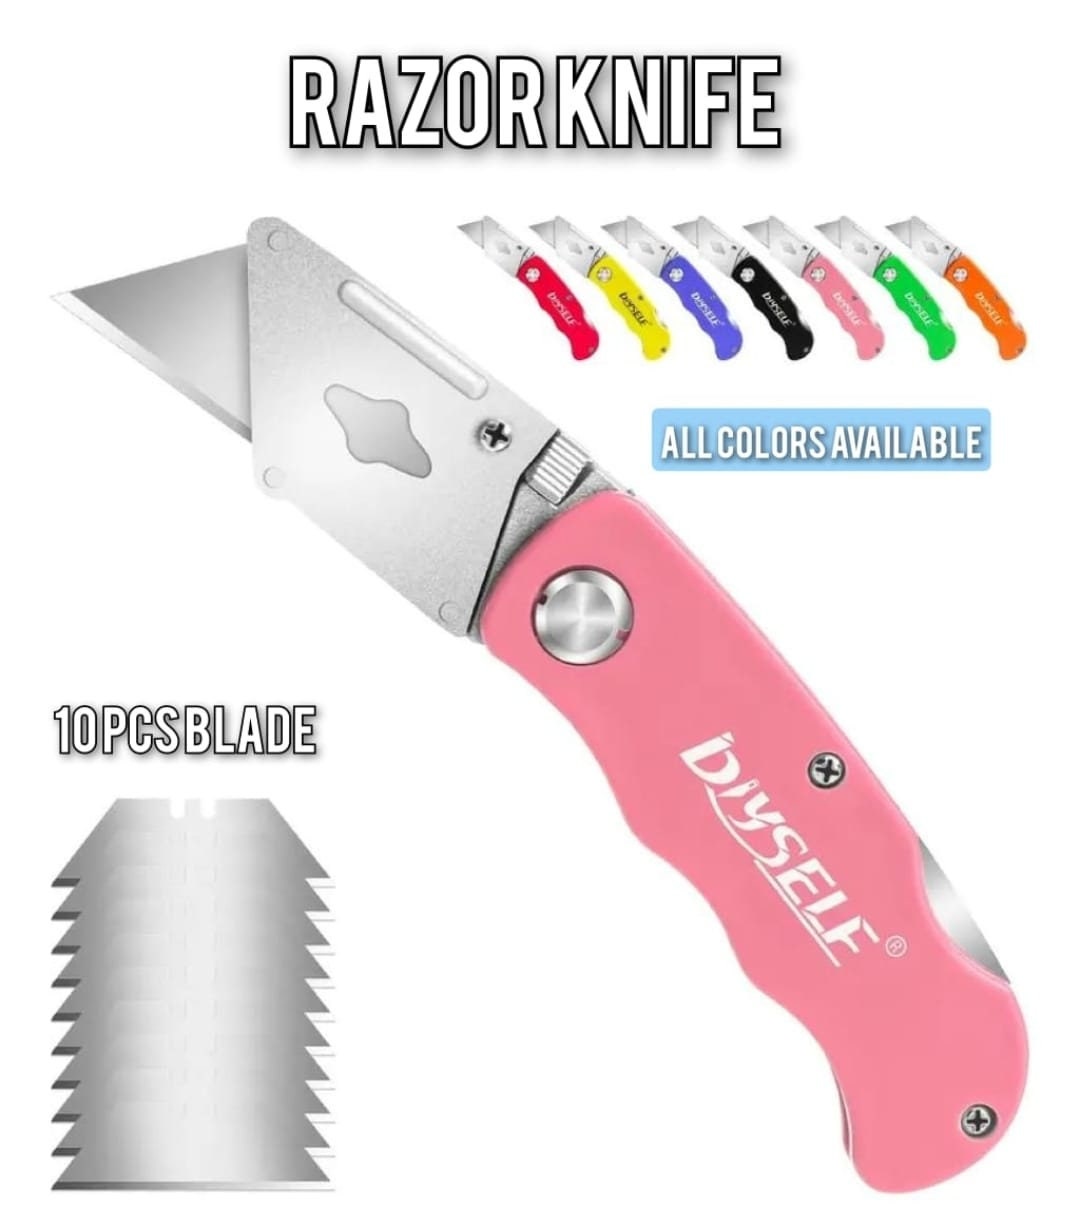 Deli Retractable Box Cutter Sharpness Utility Knife Cute Self